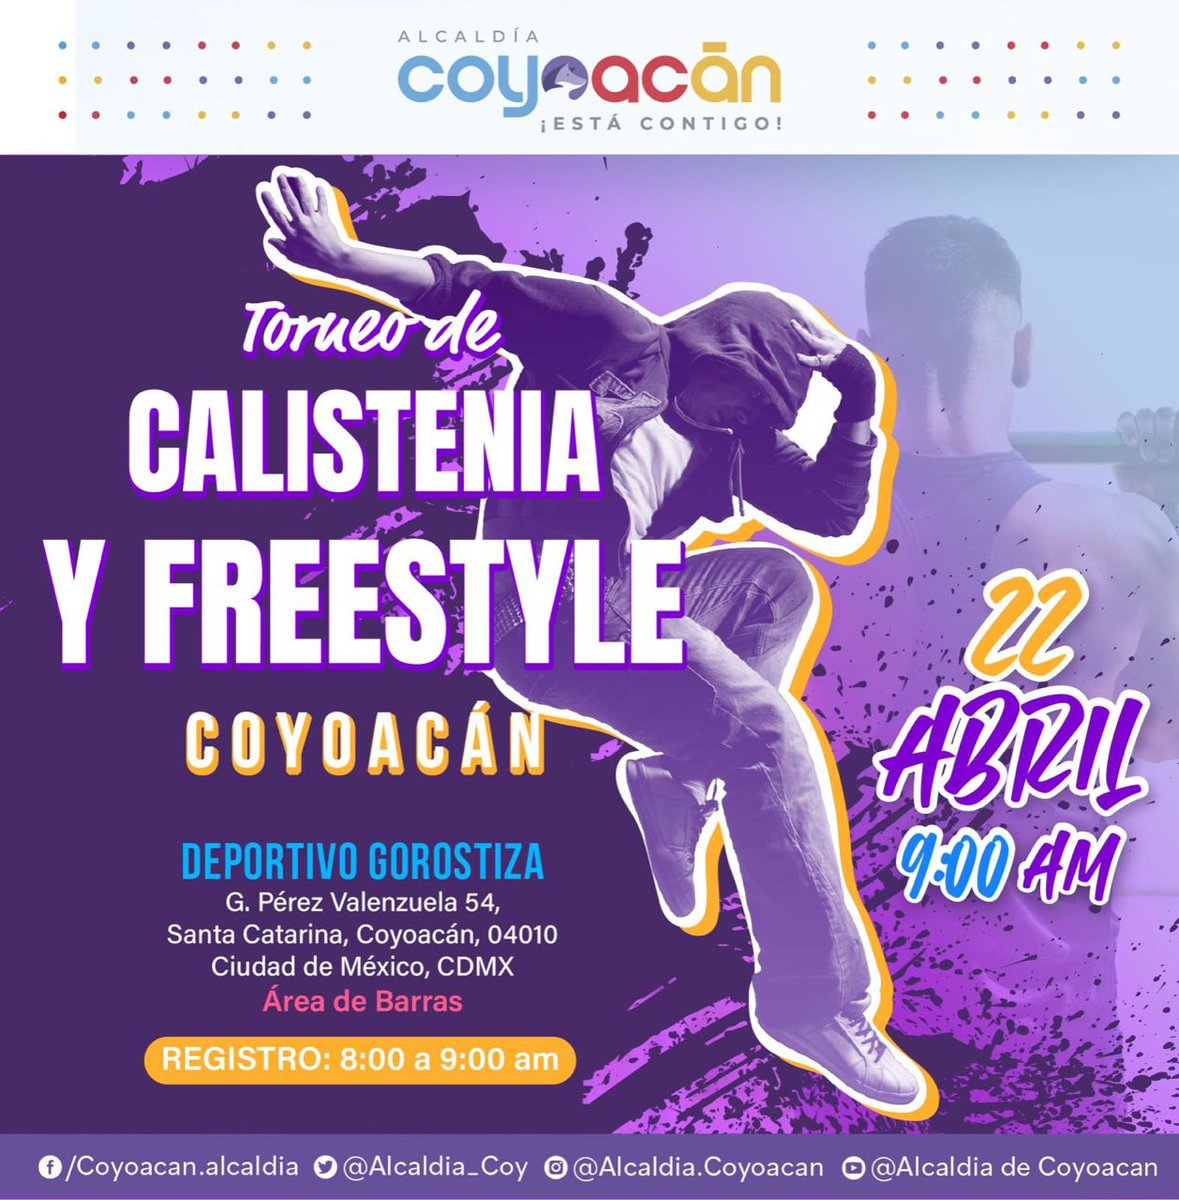 Alcaldía de Coyoacán (@Alcaldia_Coy) / Twitter